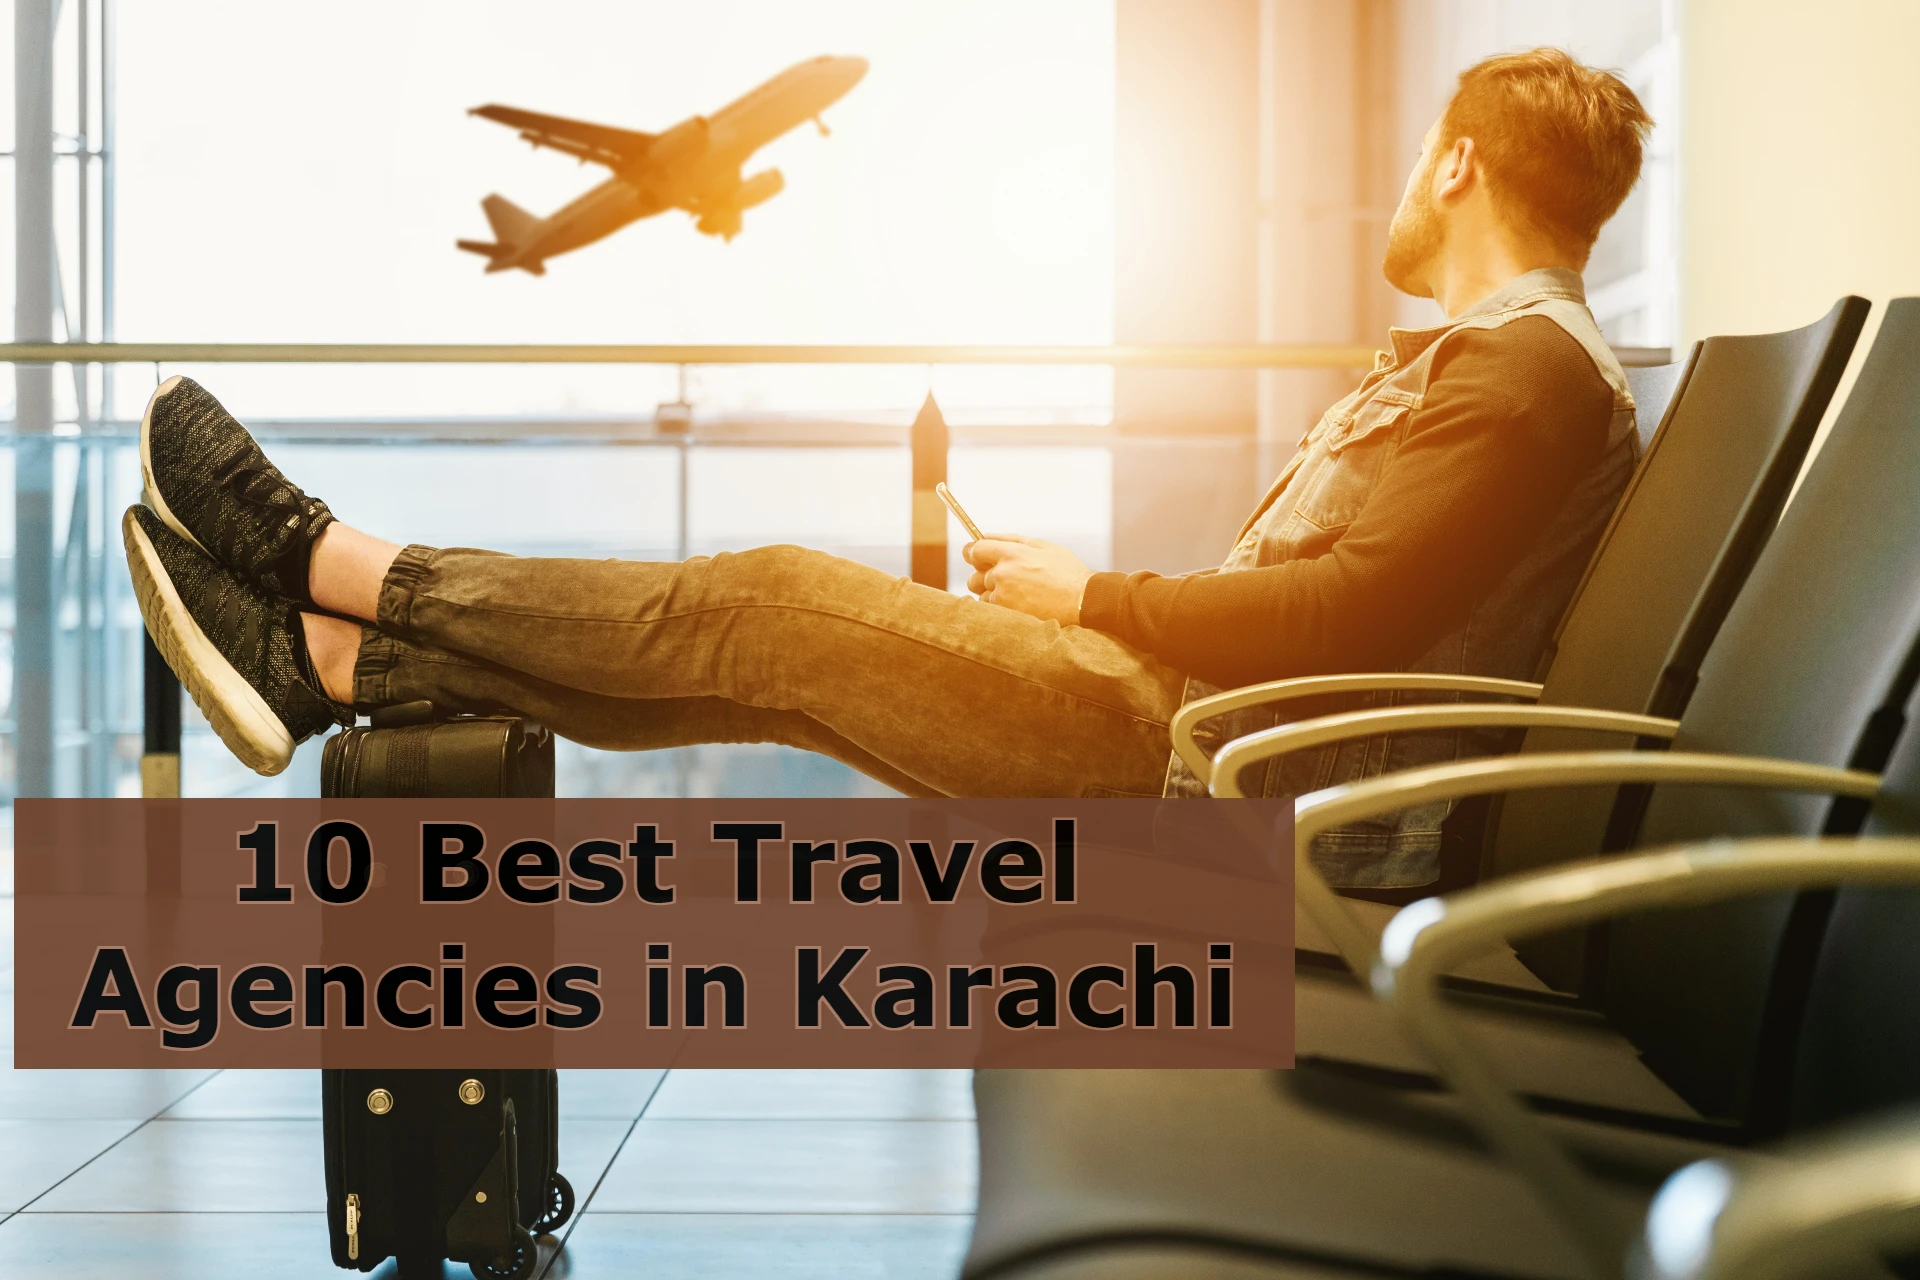 Best Travel Agencies in Karachi